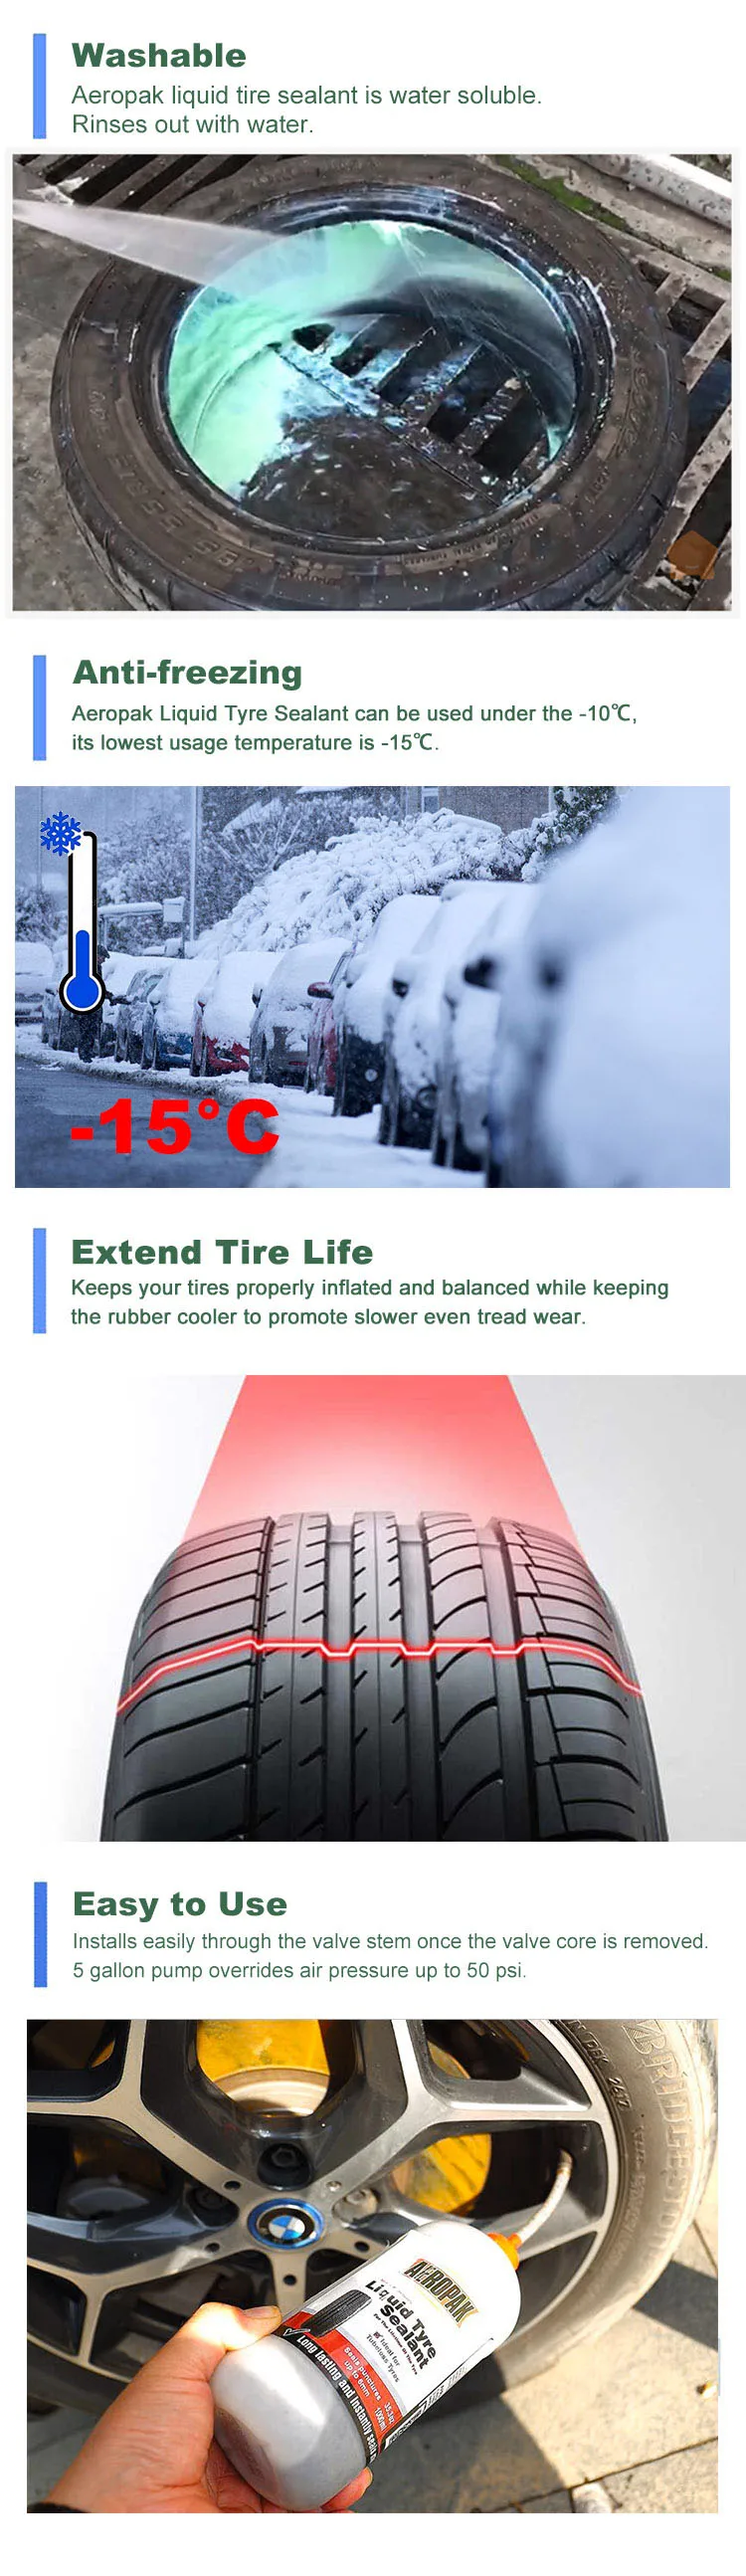 AEROPAK 1000ml Liquid Tyre Sealant for tire tube repair